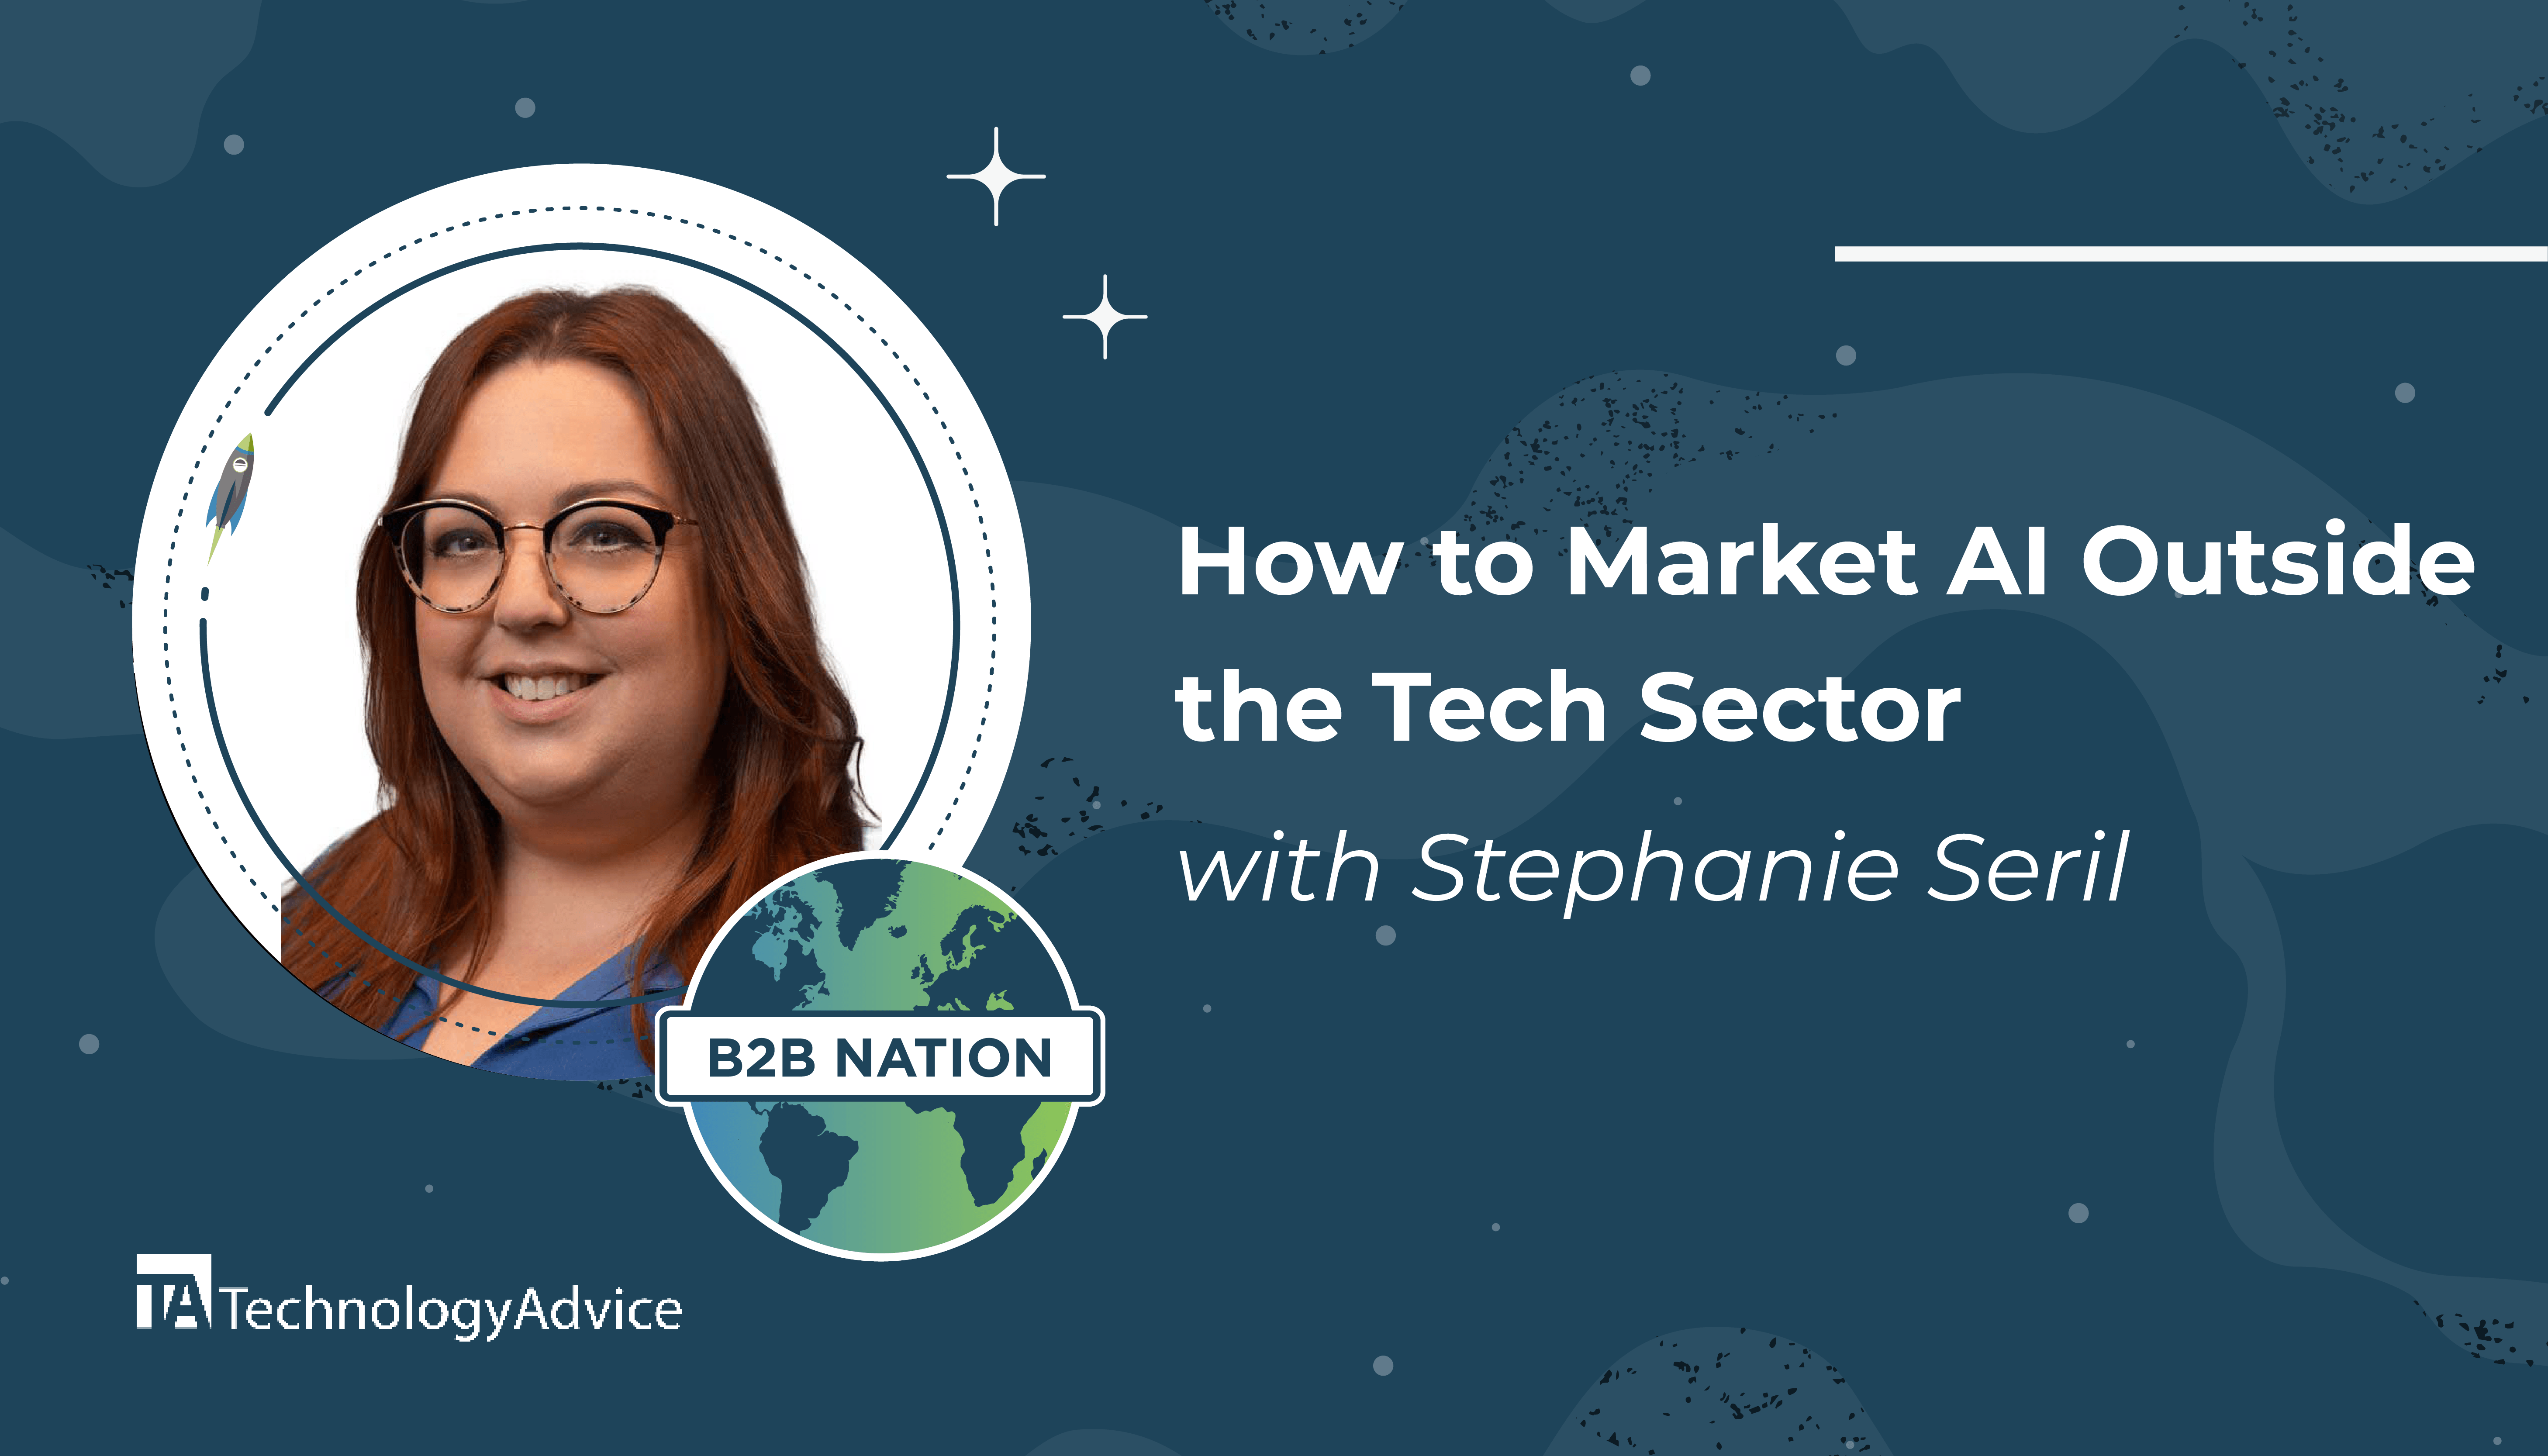 Stephanie Seril from Avvir talks about marketing AI tools on the B2B Nation podcast.